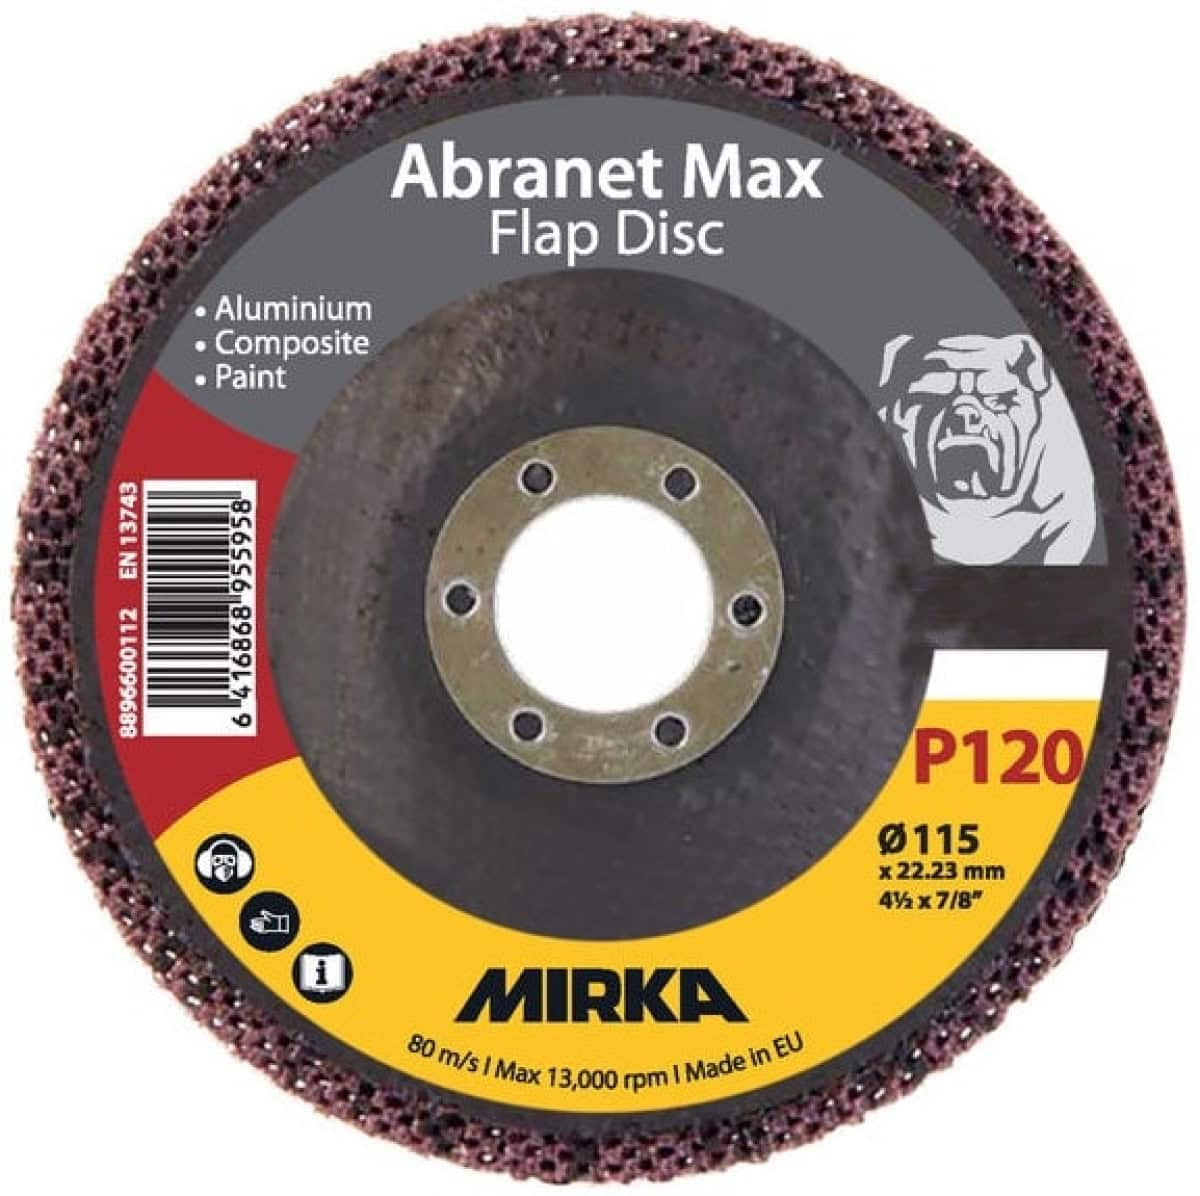 Mirka® Abranet® Max Flap Disc 8896600112, Ø 115 mm x 22 mm, P120, Fächerschleifscheibe mit Aluminiumoxidkorn